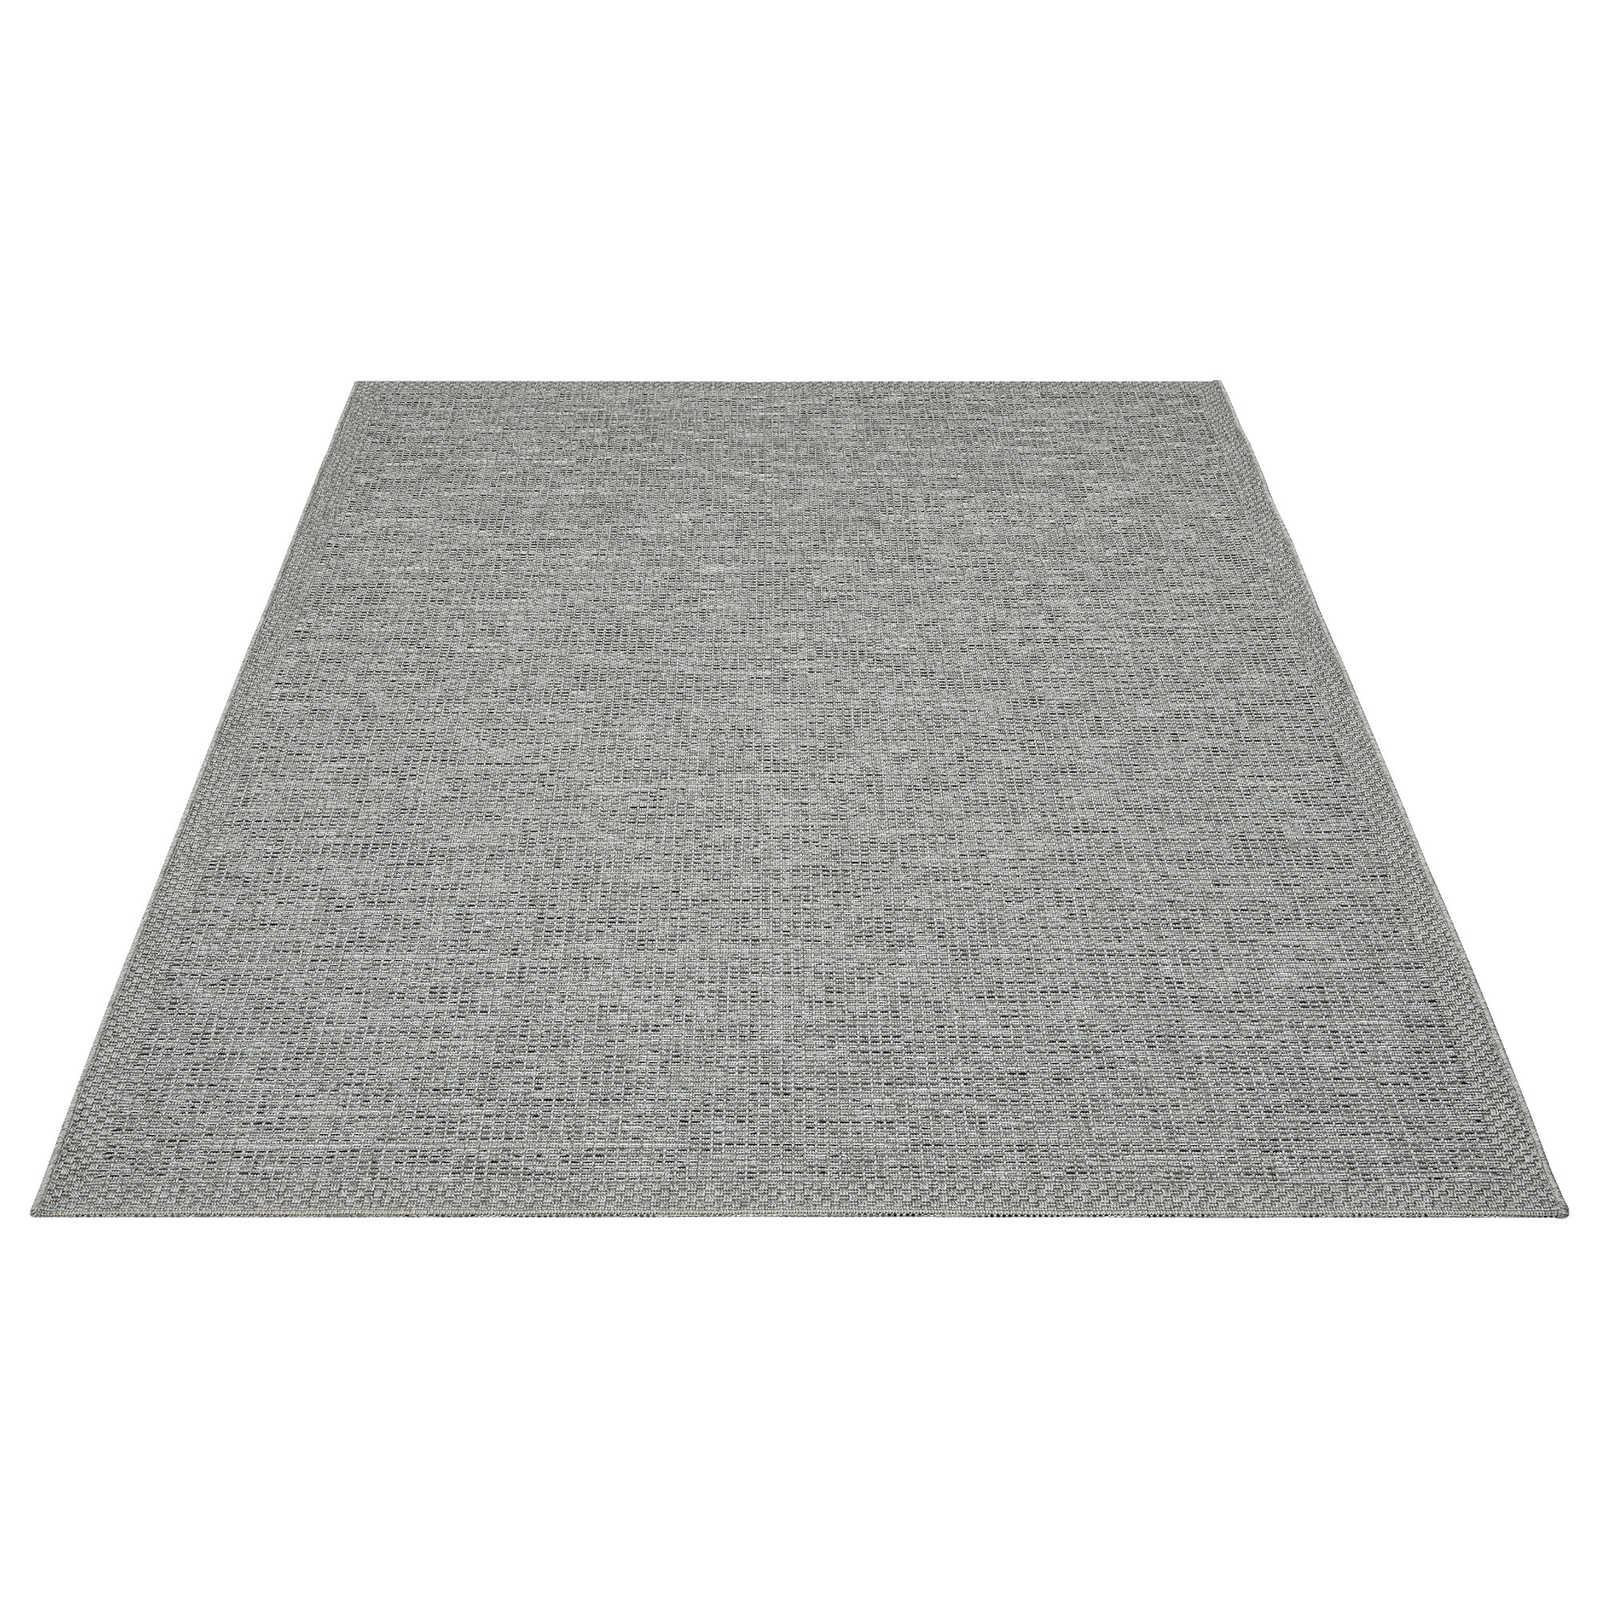 Tappeto liscio in grigio - 280 x 200 cm
